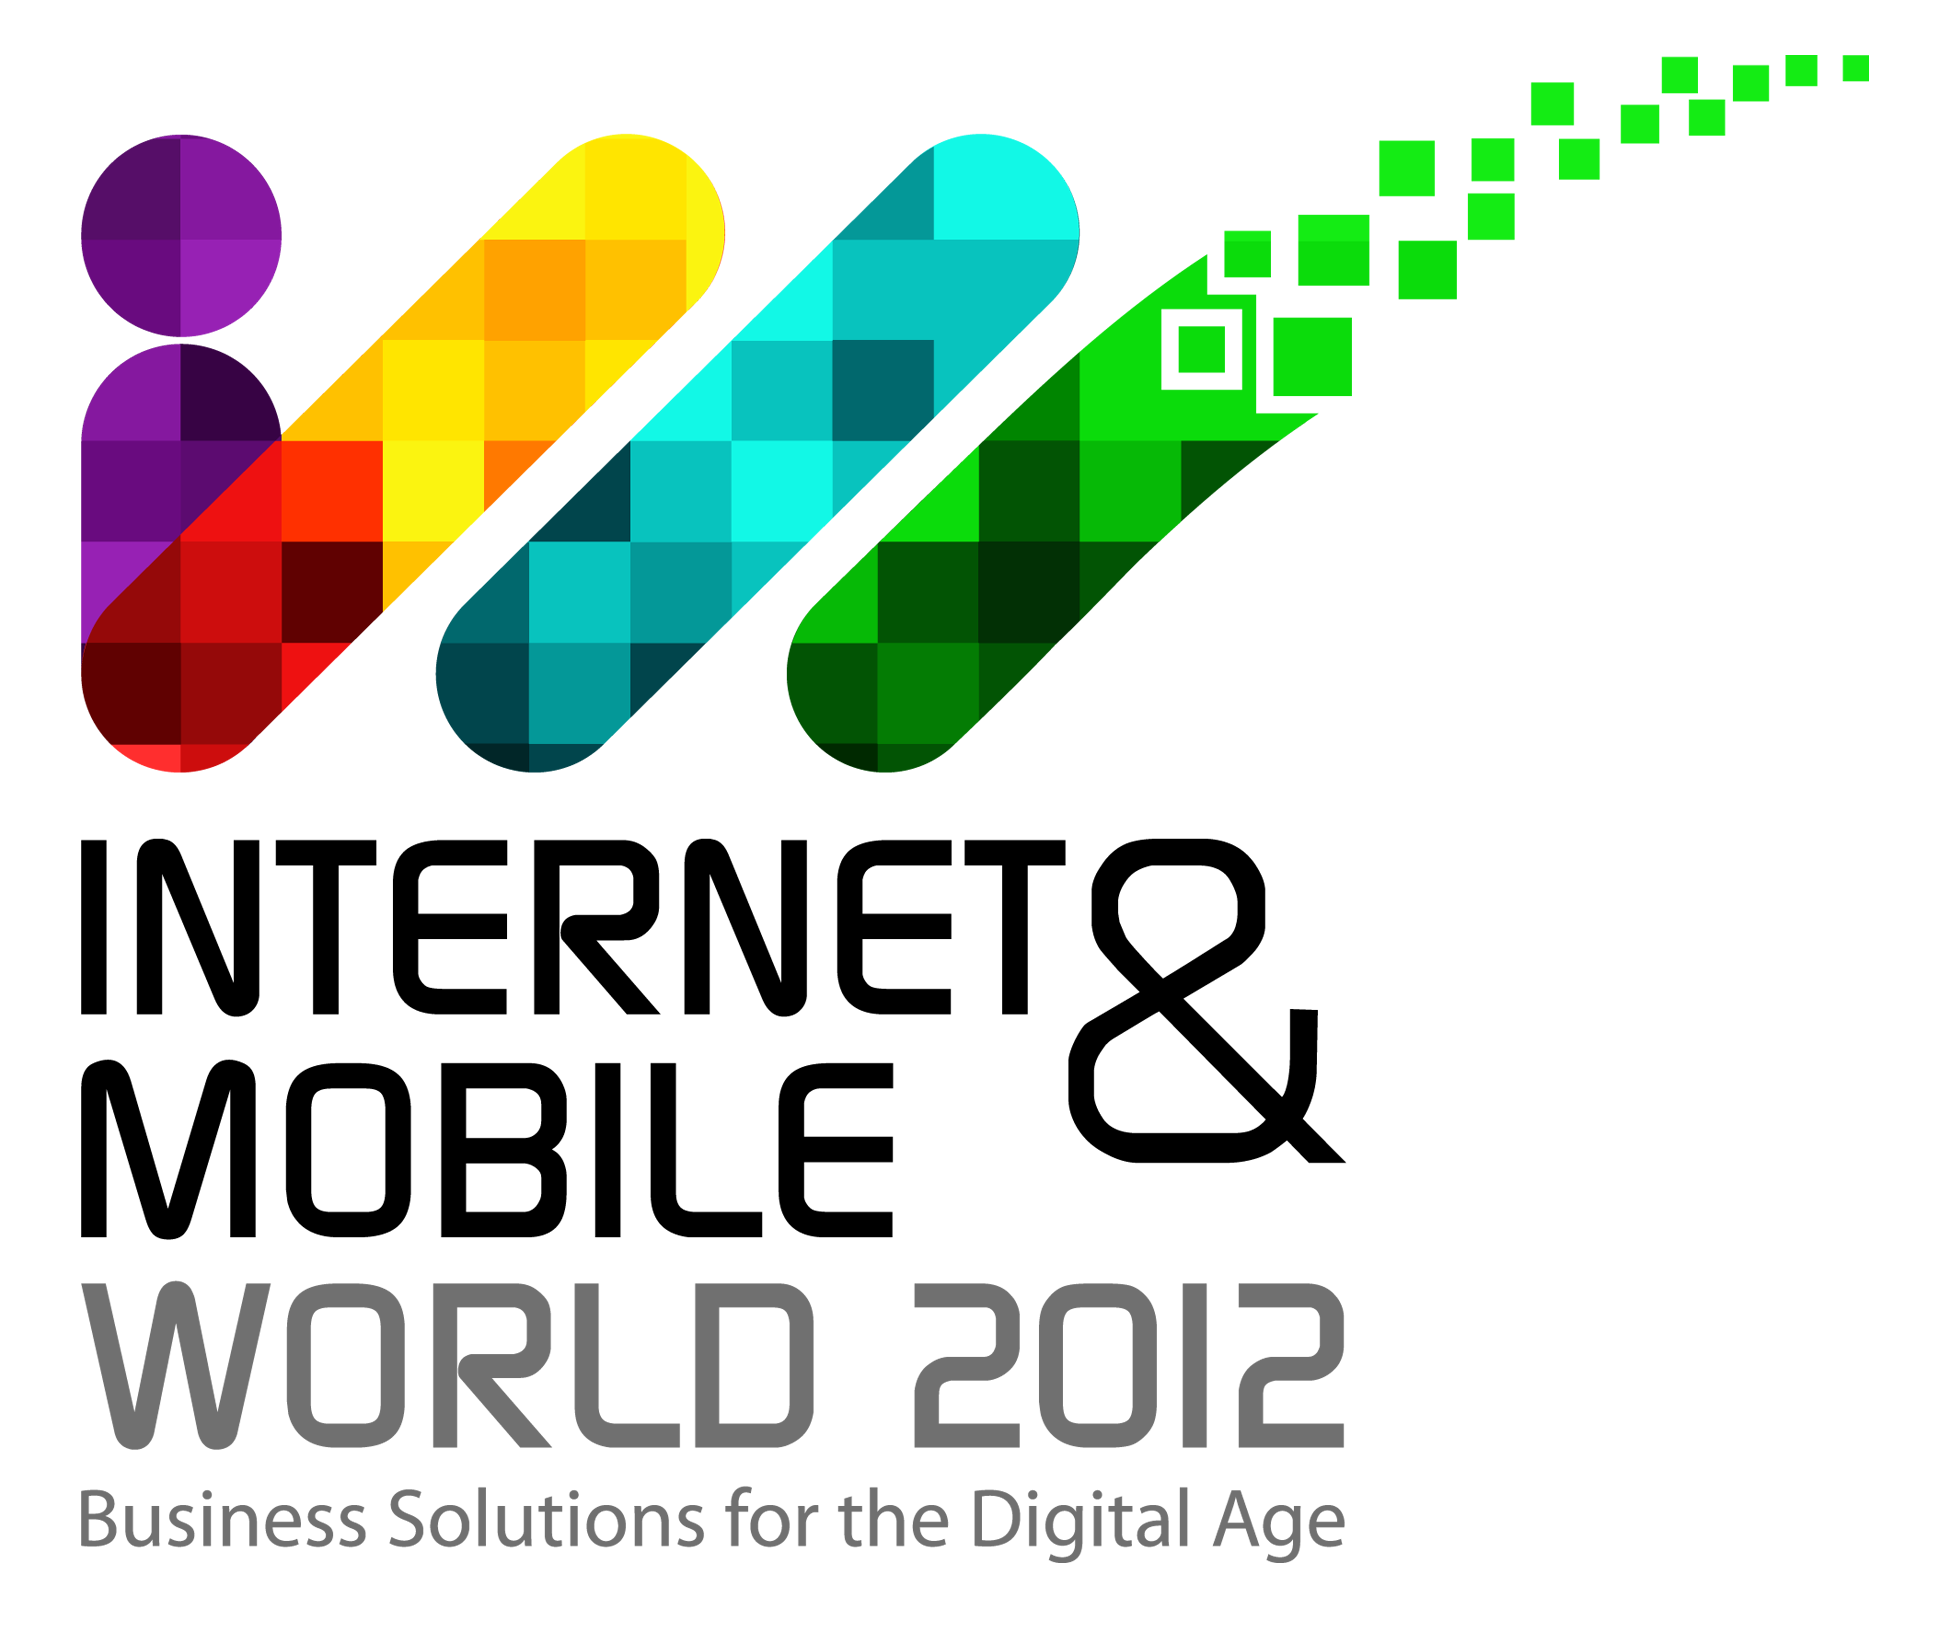 Internet & Mobile World 2012